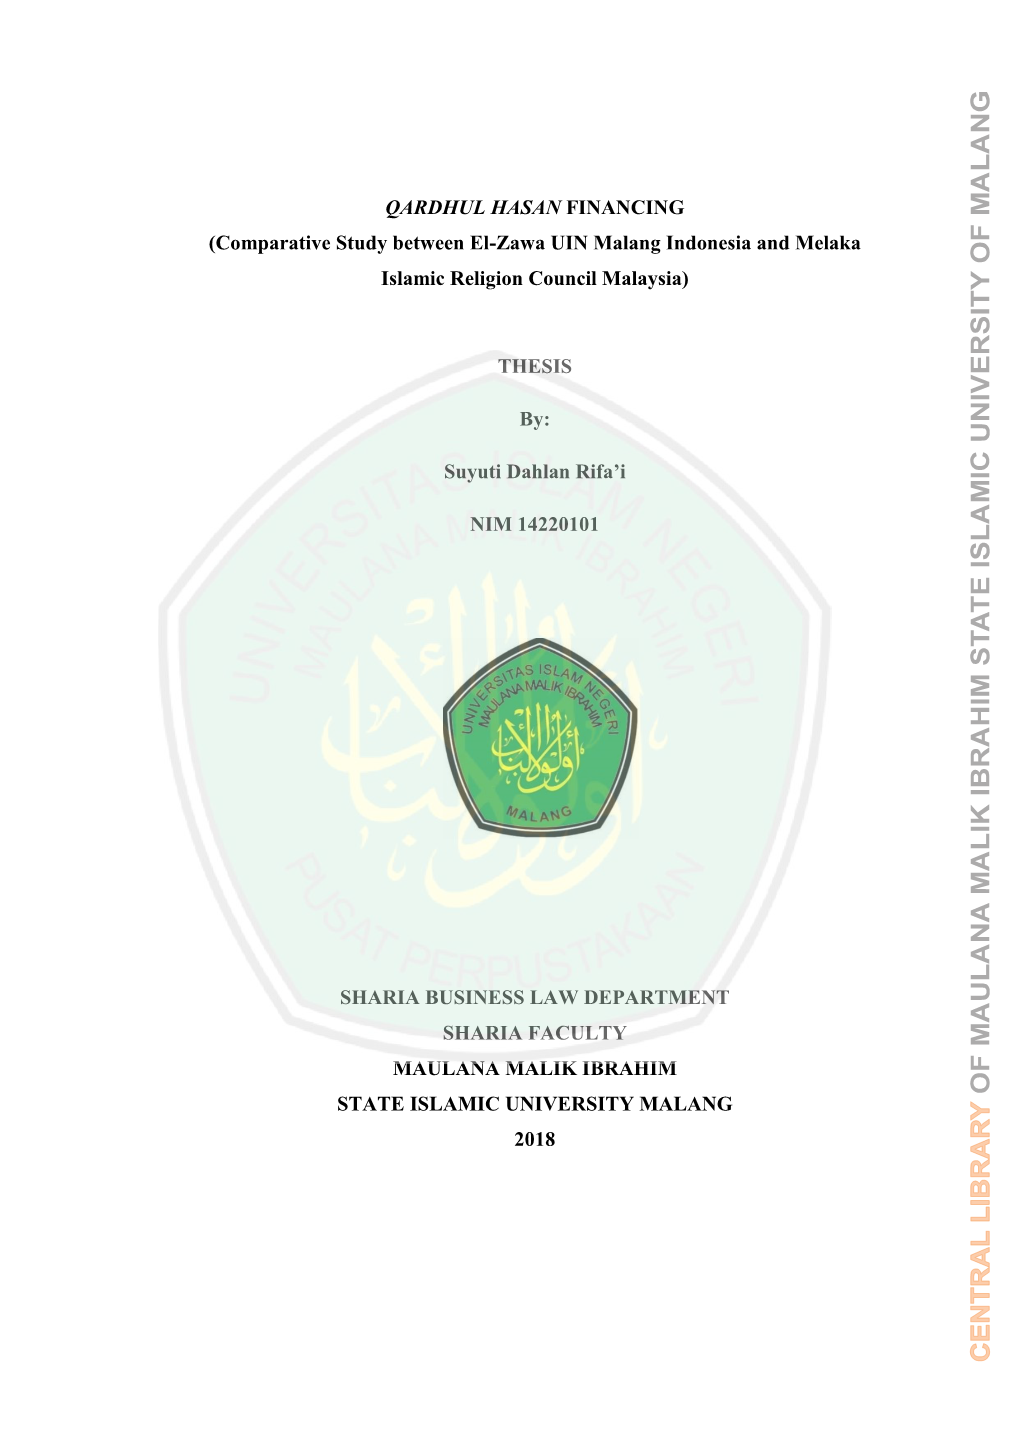 QARDHUL HASAN FINANCING (Comparative Study Between El-Zawa UIN Malang Indonesia and Melaka Islamic Religion Council Malaysia)